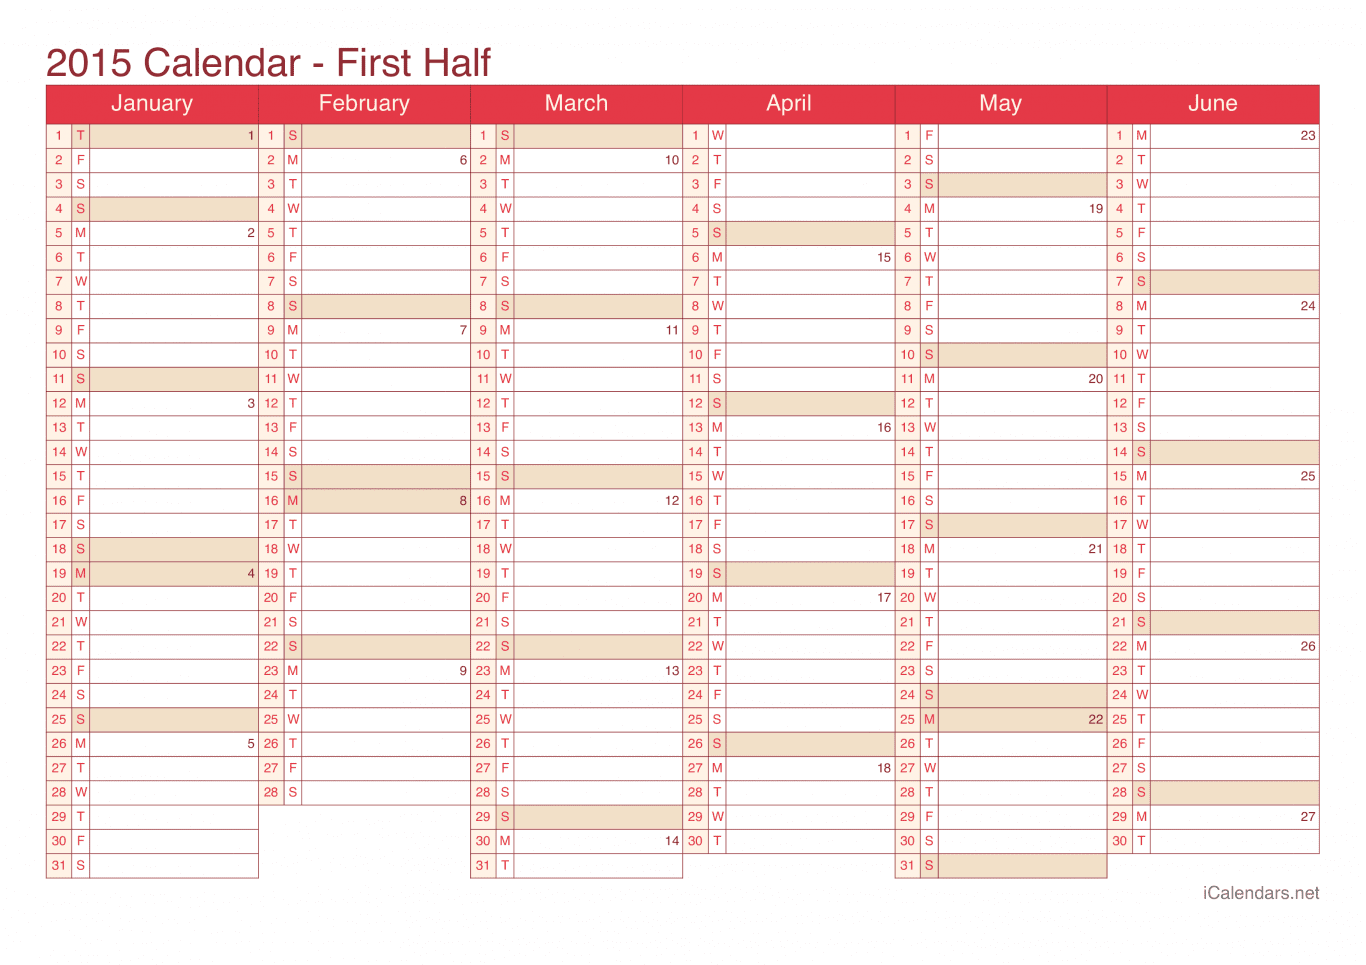 2015 Half year calendar with week numbers - Cherry